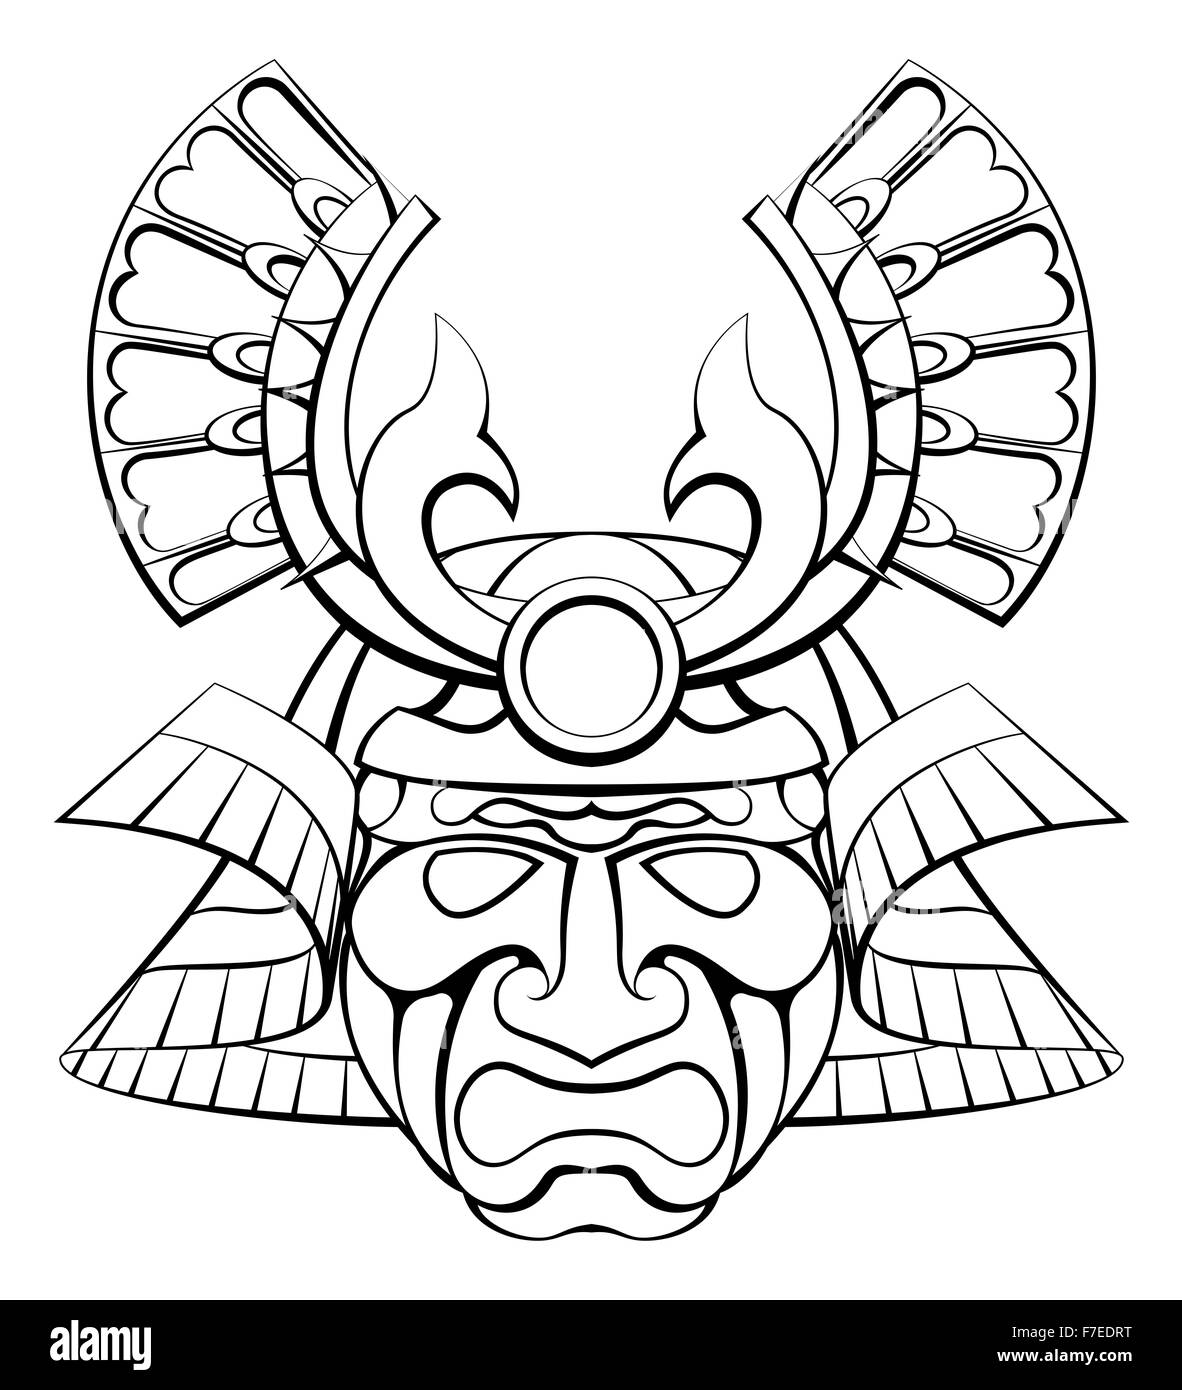 A samurai mask helmet design illustration Stock Photo